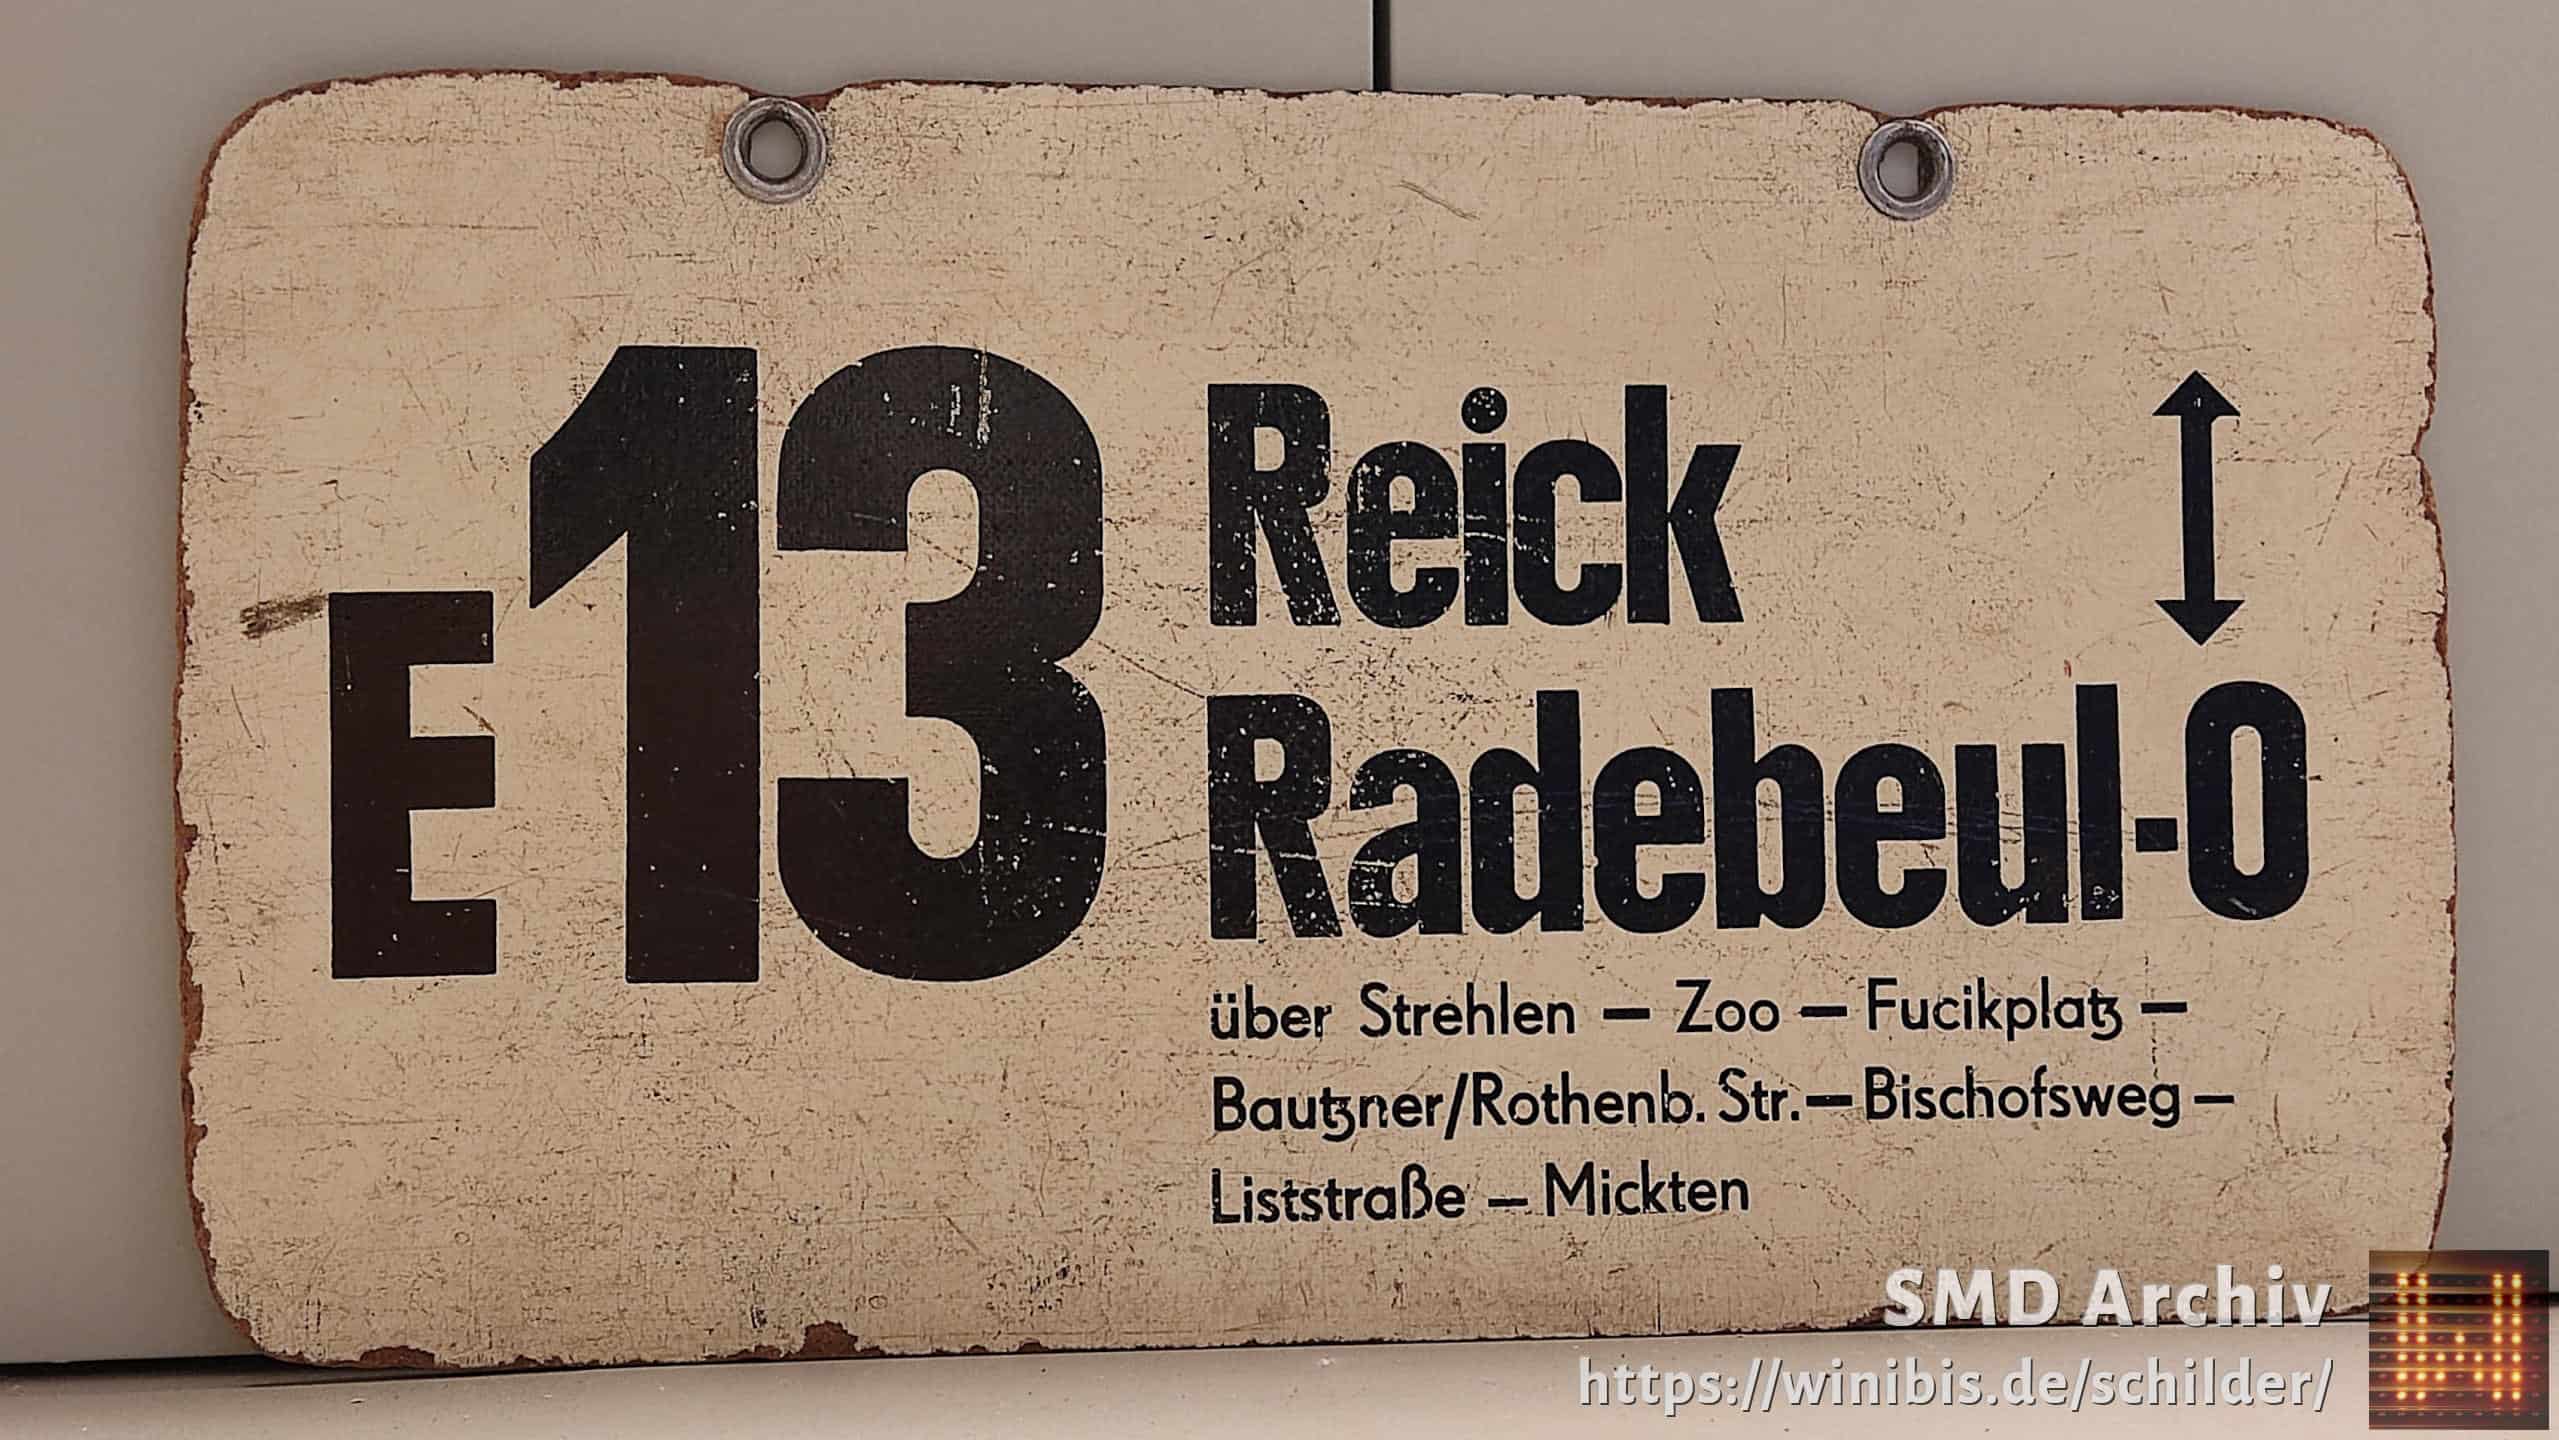 E13 Reick – Radebeul‑O